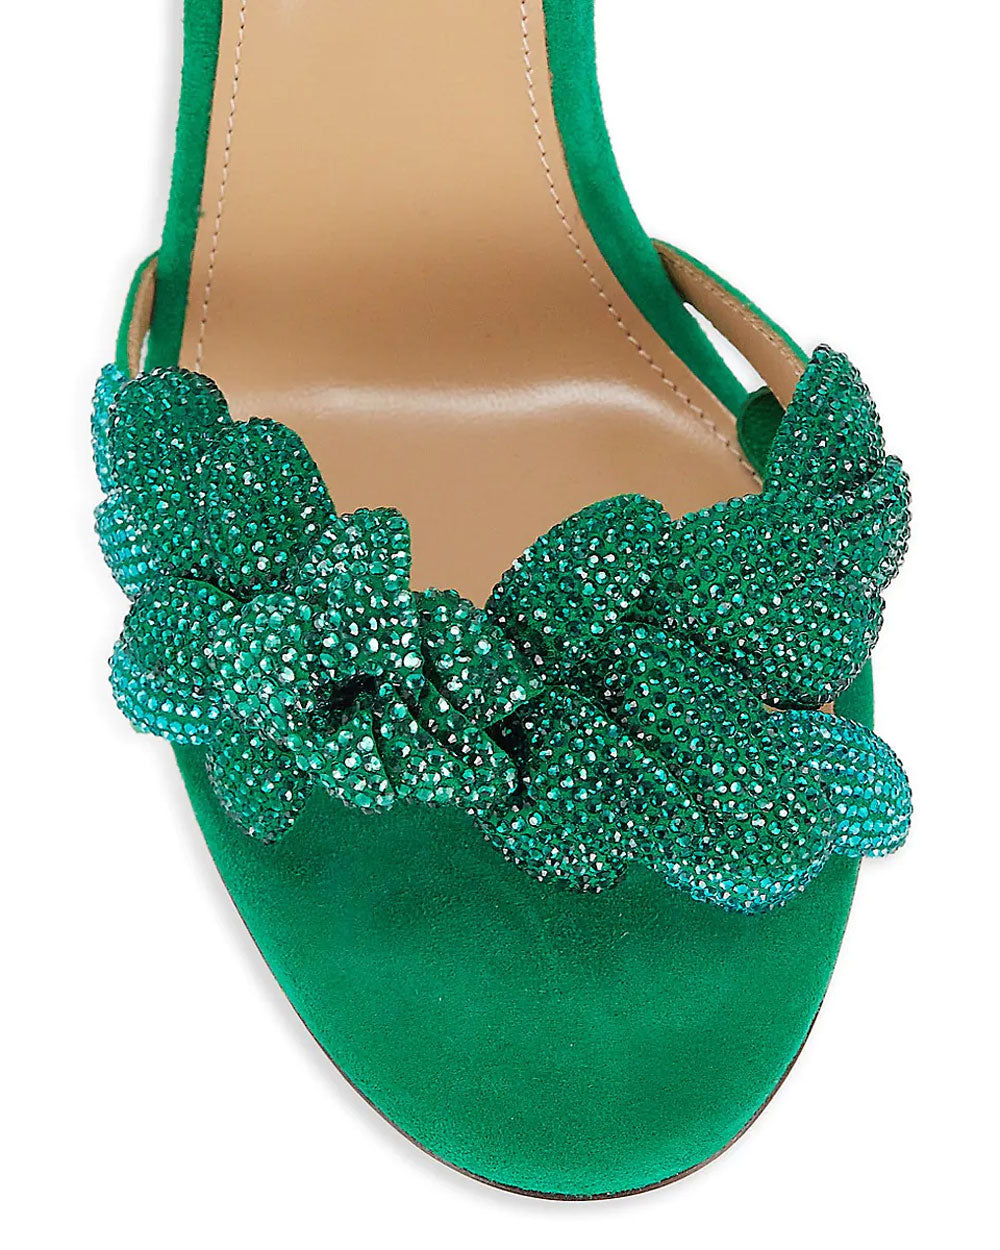 Galactic Flower Sandal in Emerald